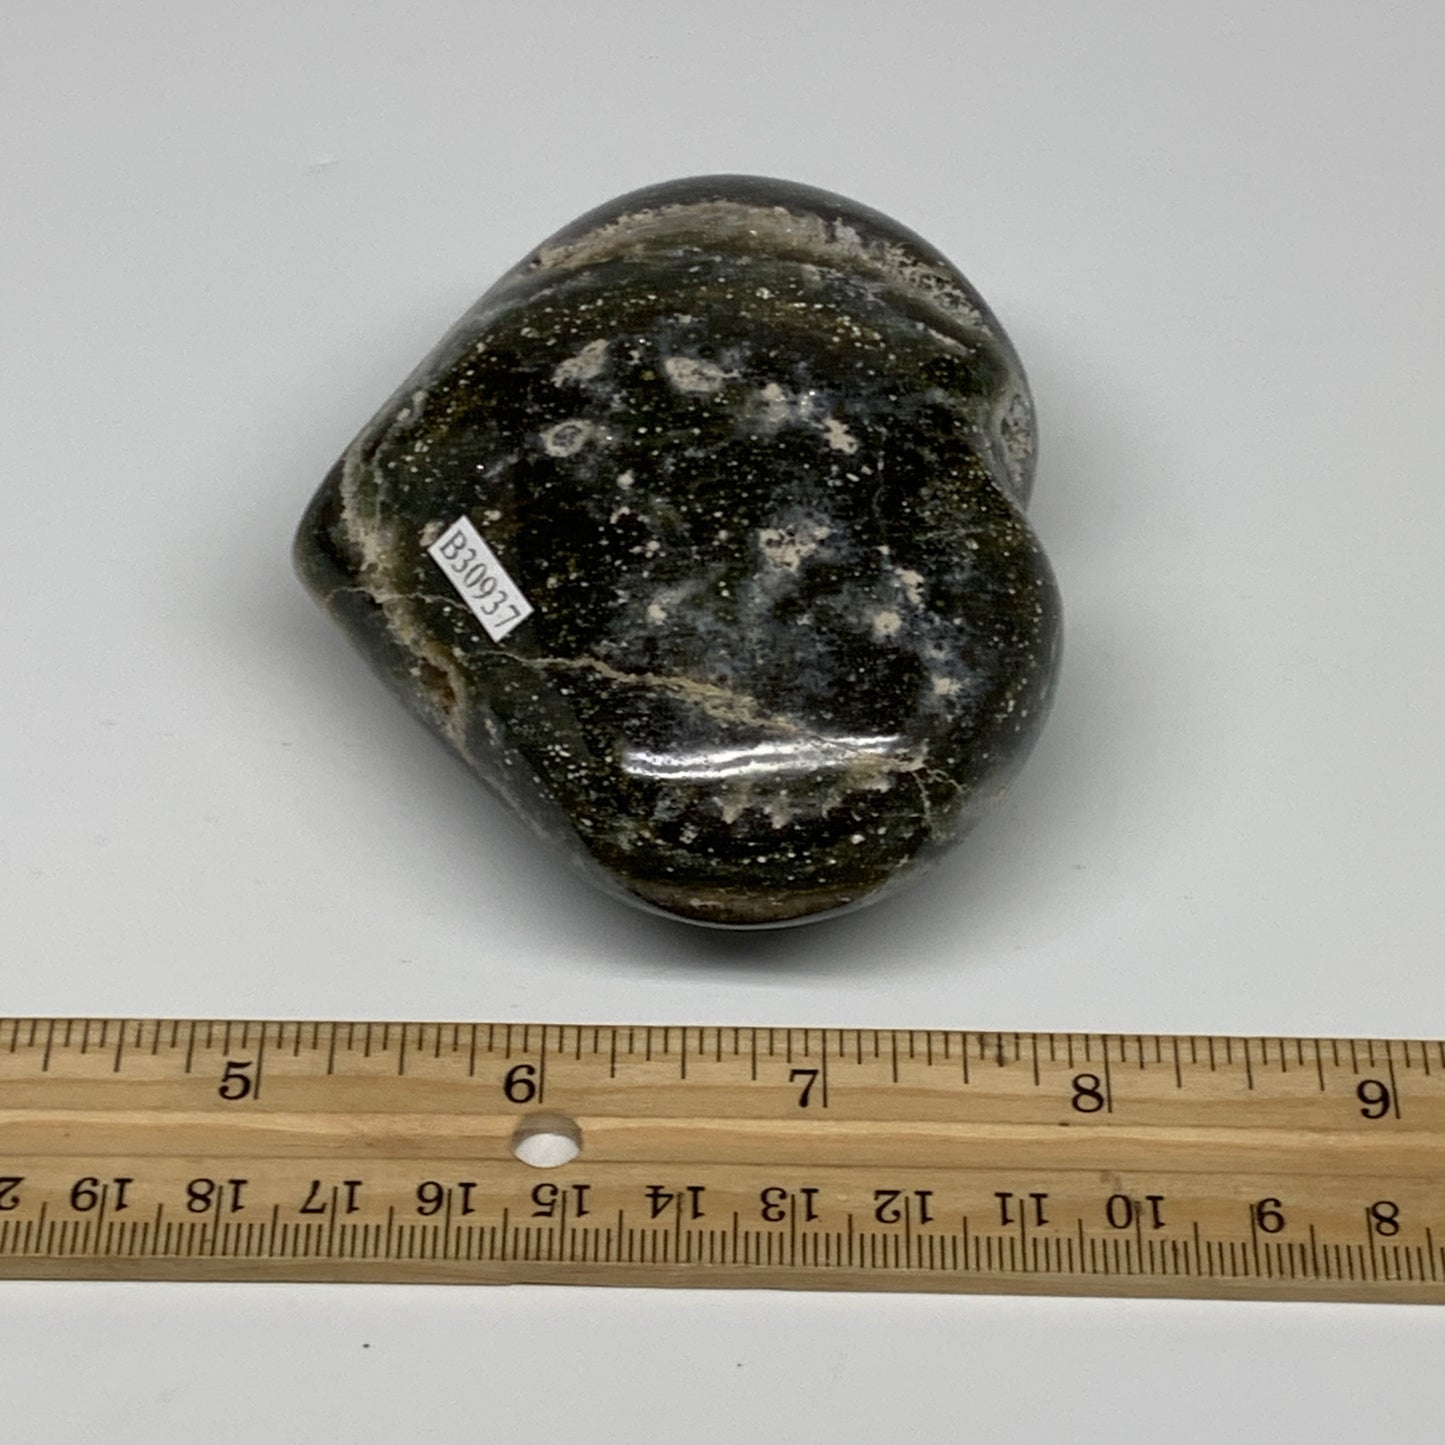 0.70 lbs, 2.8"x3.5"x1.6" Ocean Jasper Heart Polished Healing Crystal, B30937